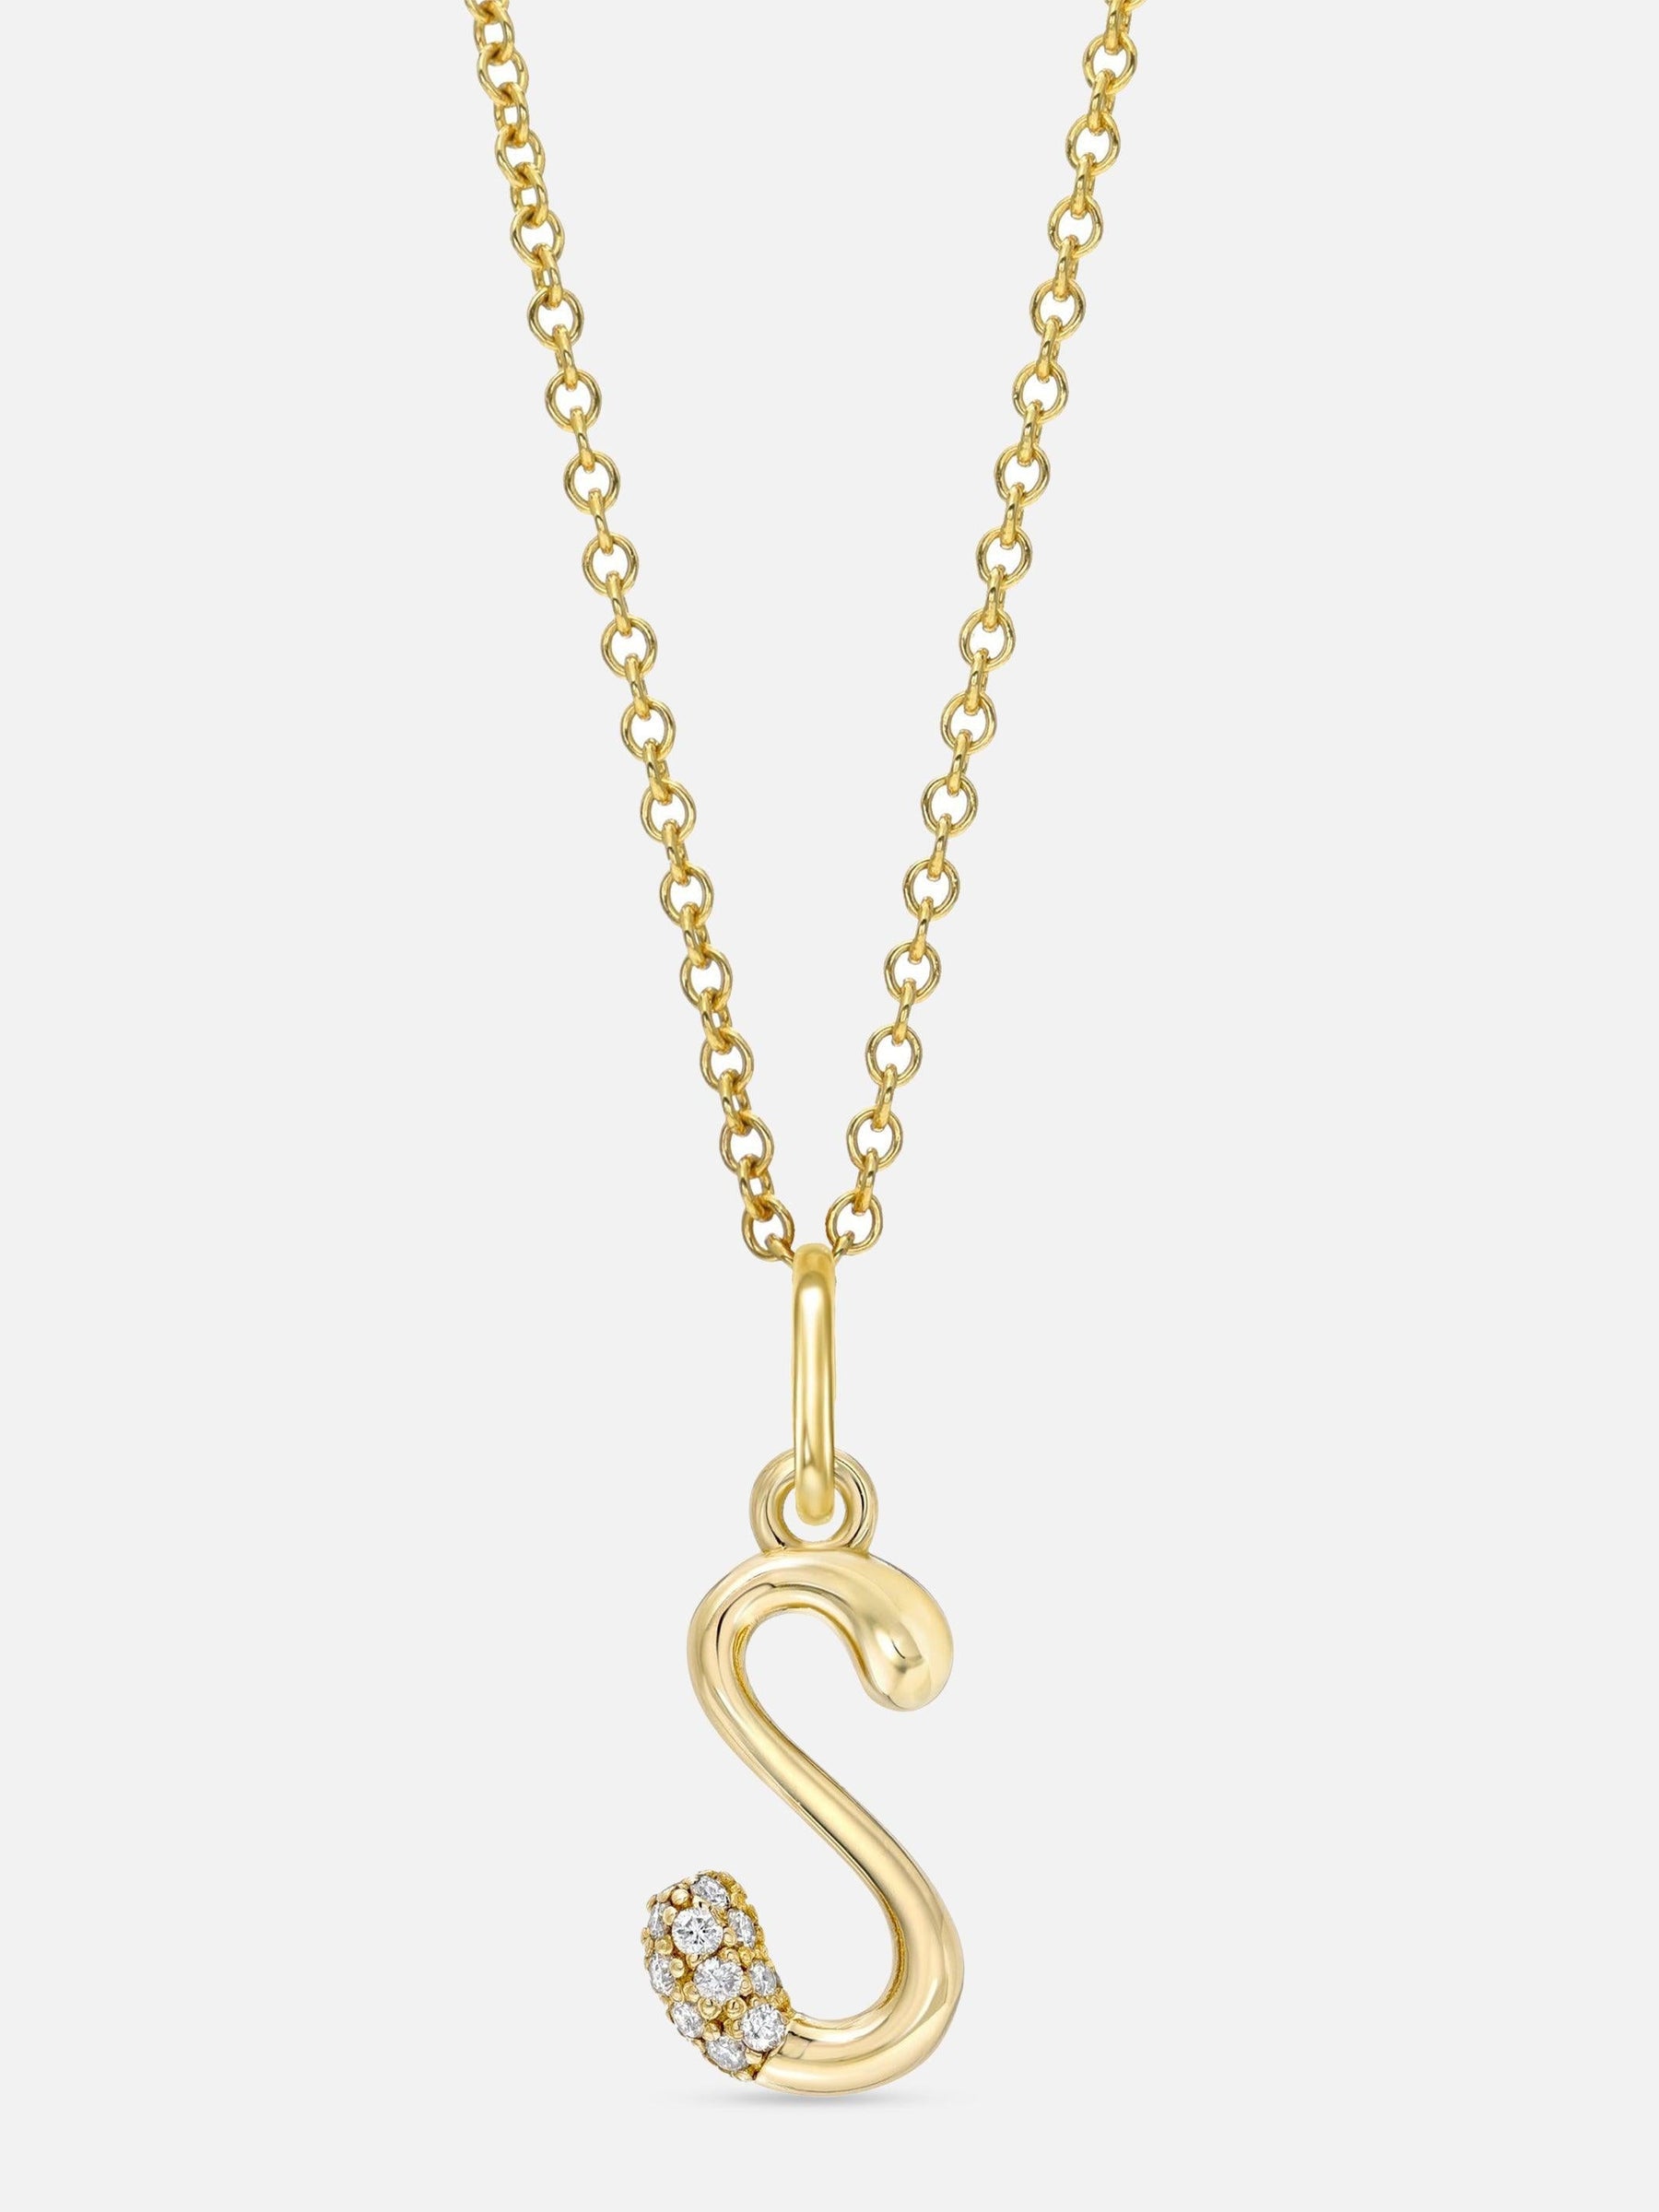 Alphabet Charm Necklace with Diamonds - Stacy Nolan - At Present